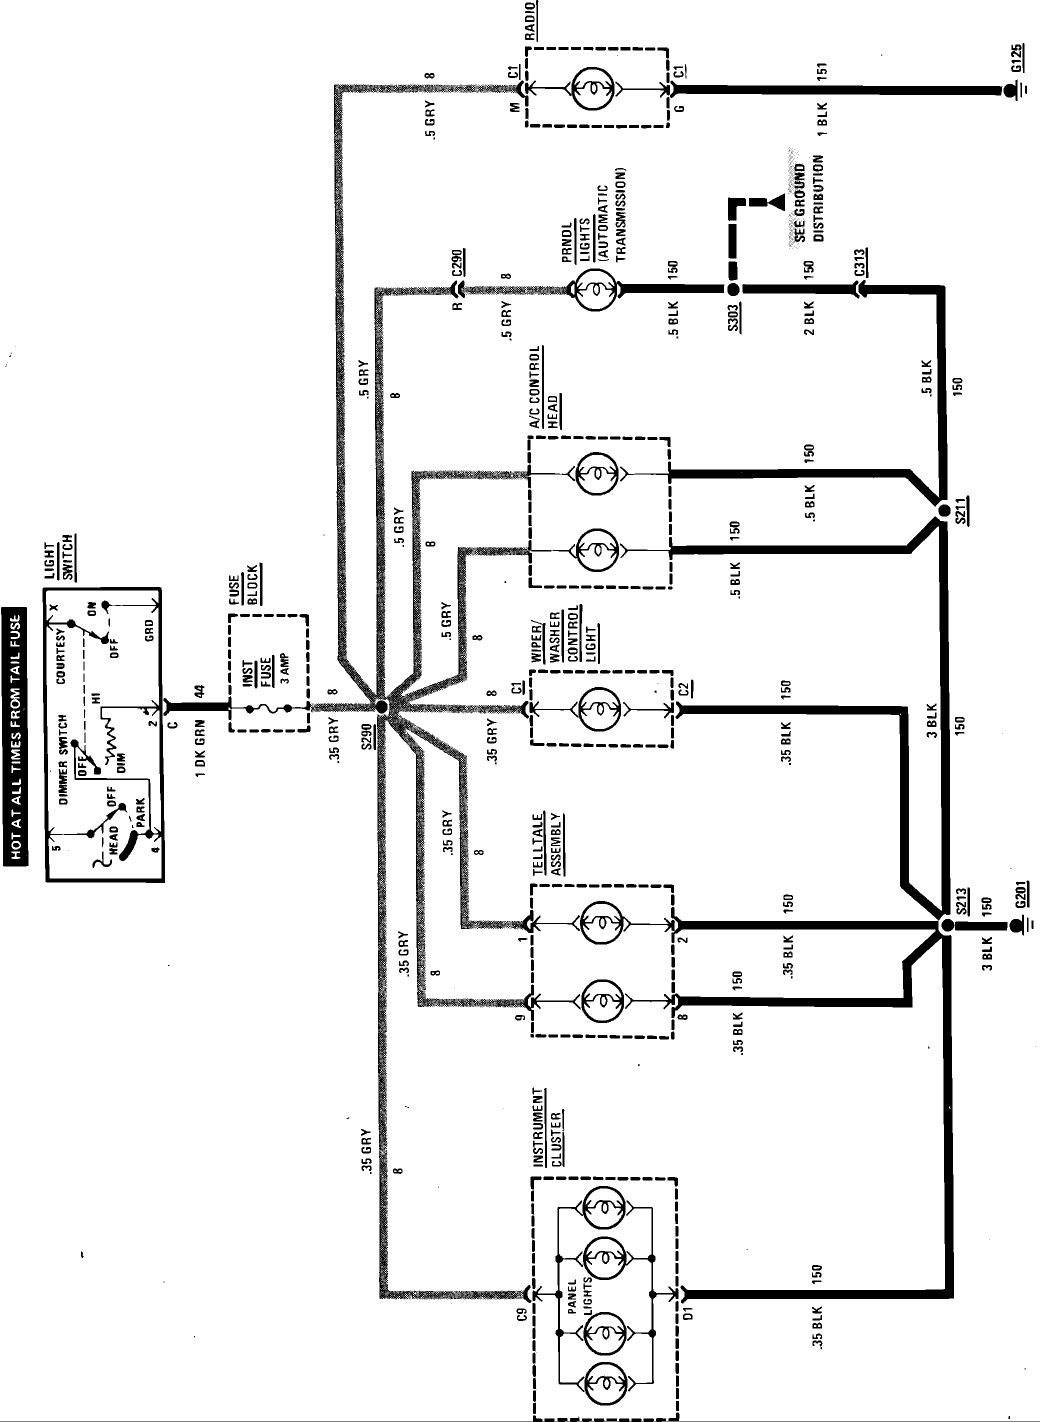 95-98 chevy silverado headlight switch wiring diagram chevy truck